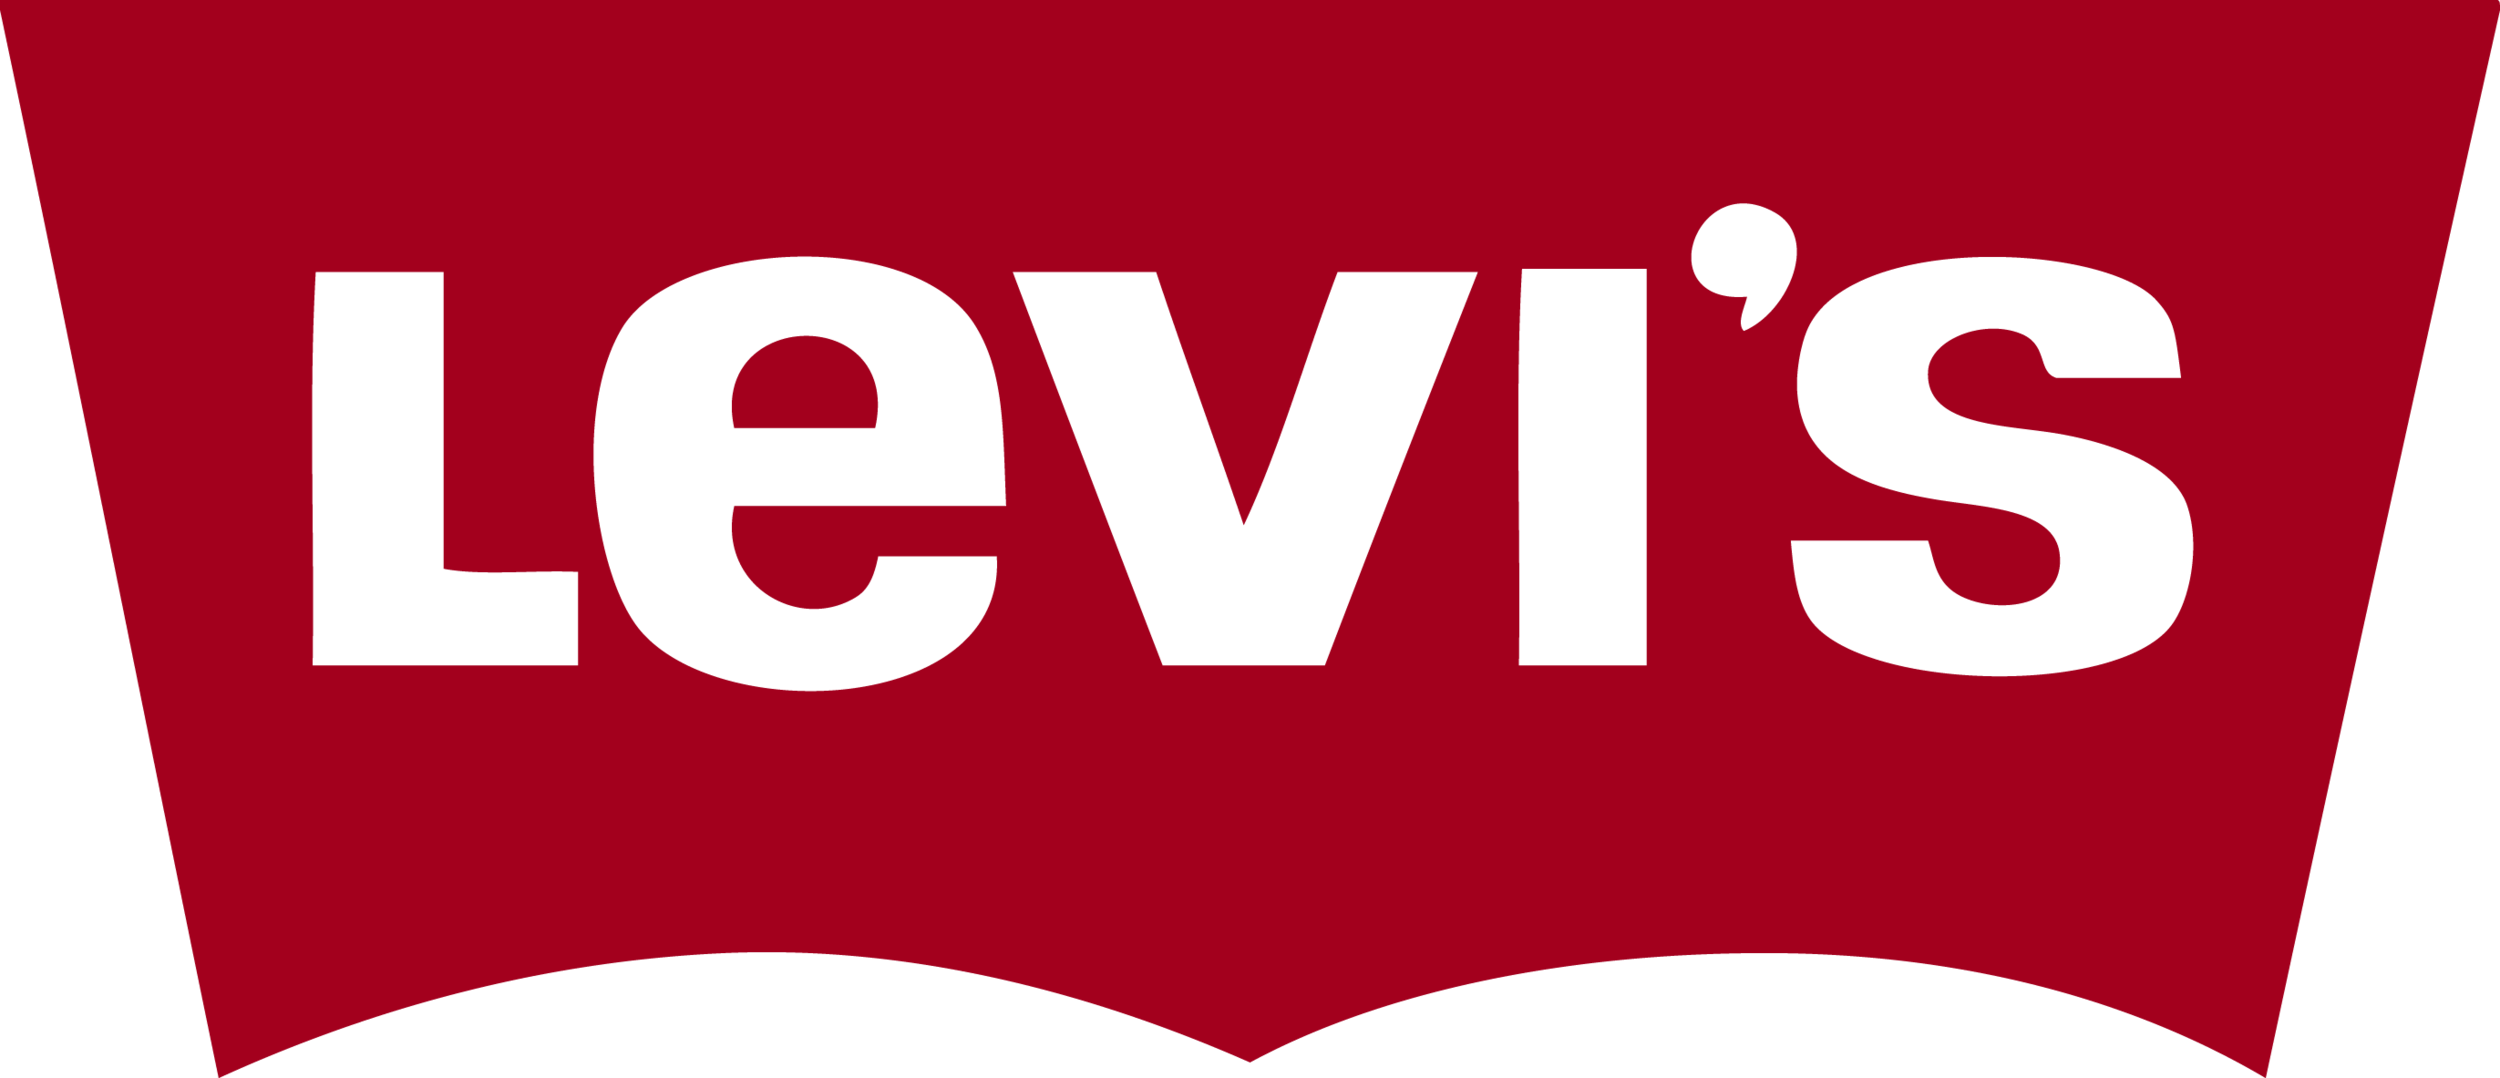 brand_levis_logo.png